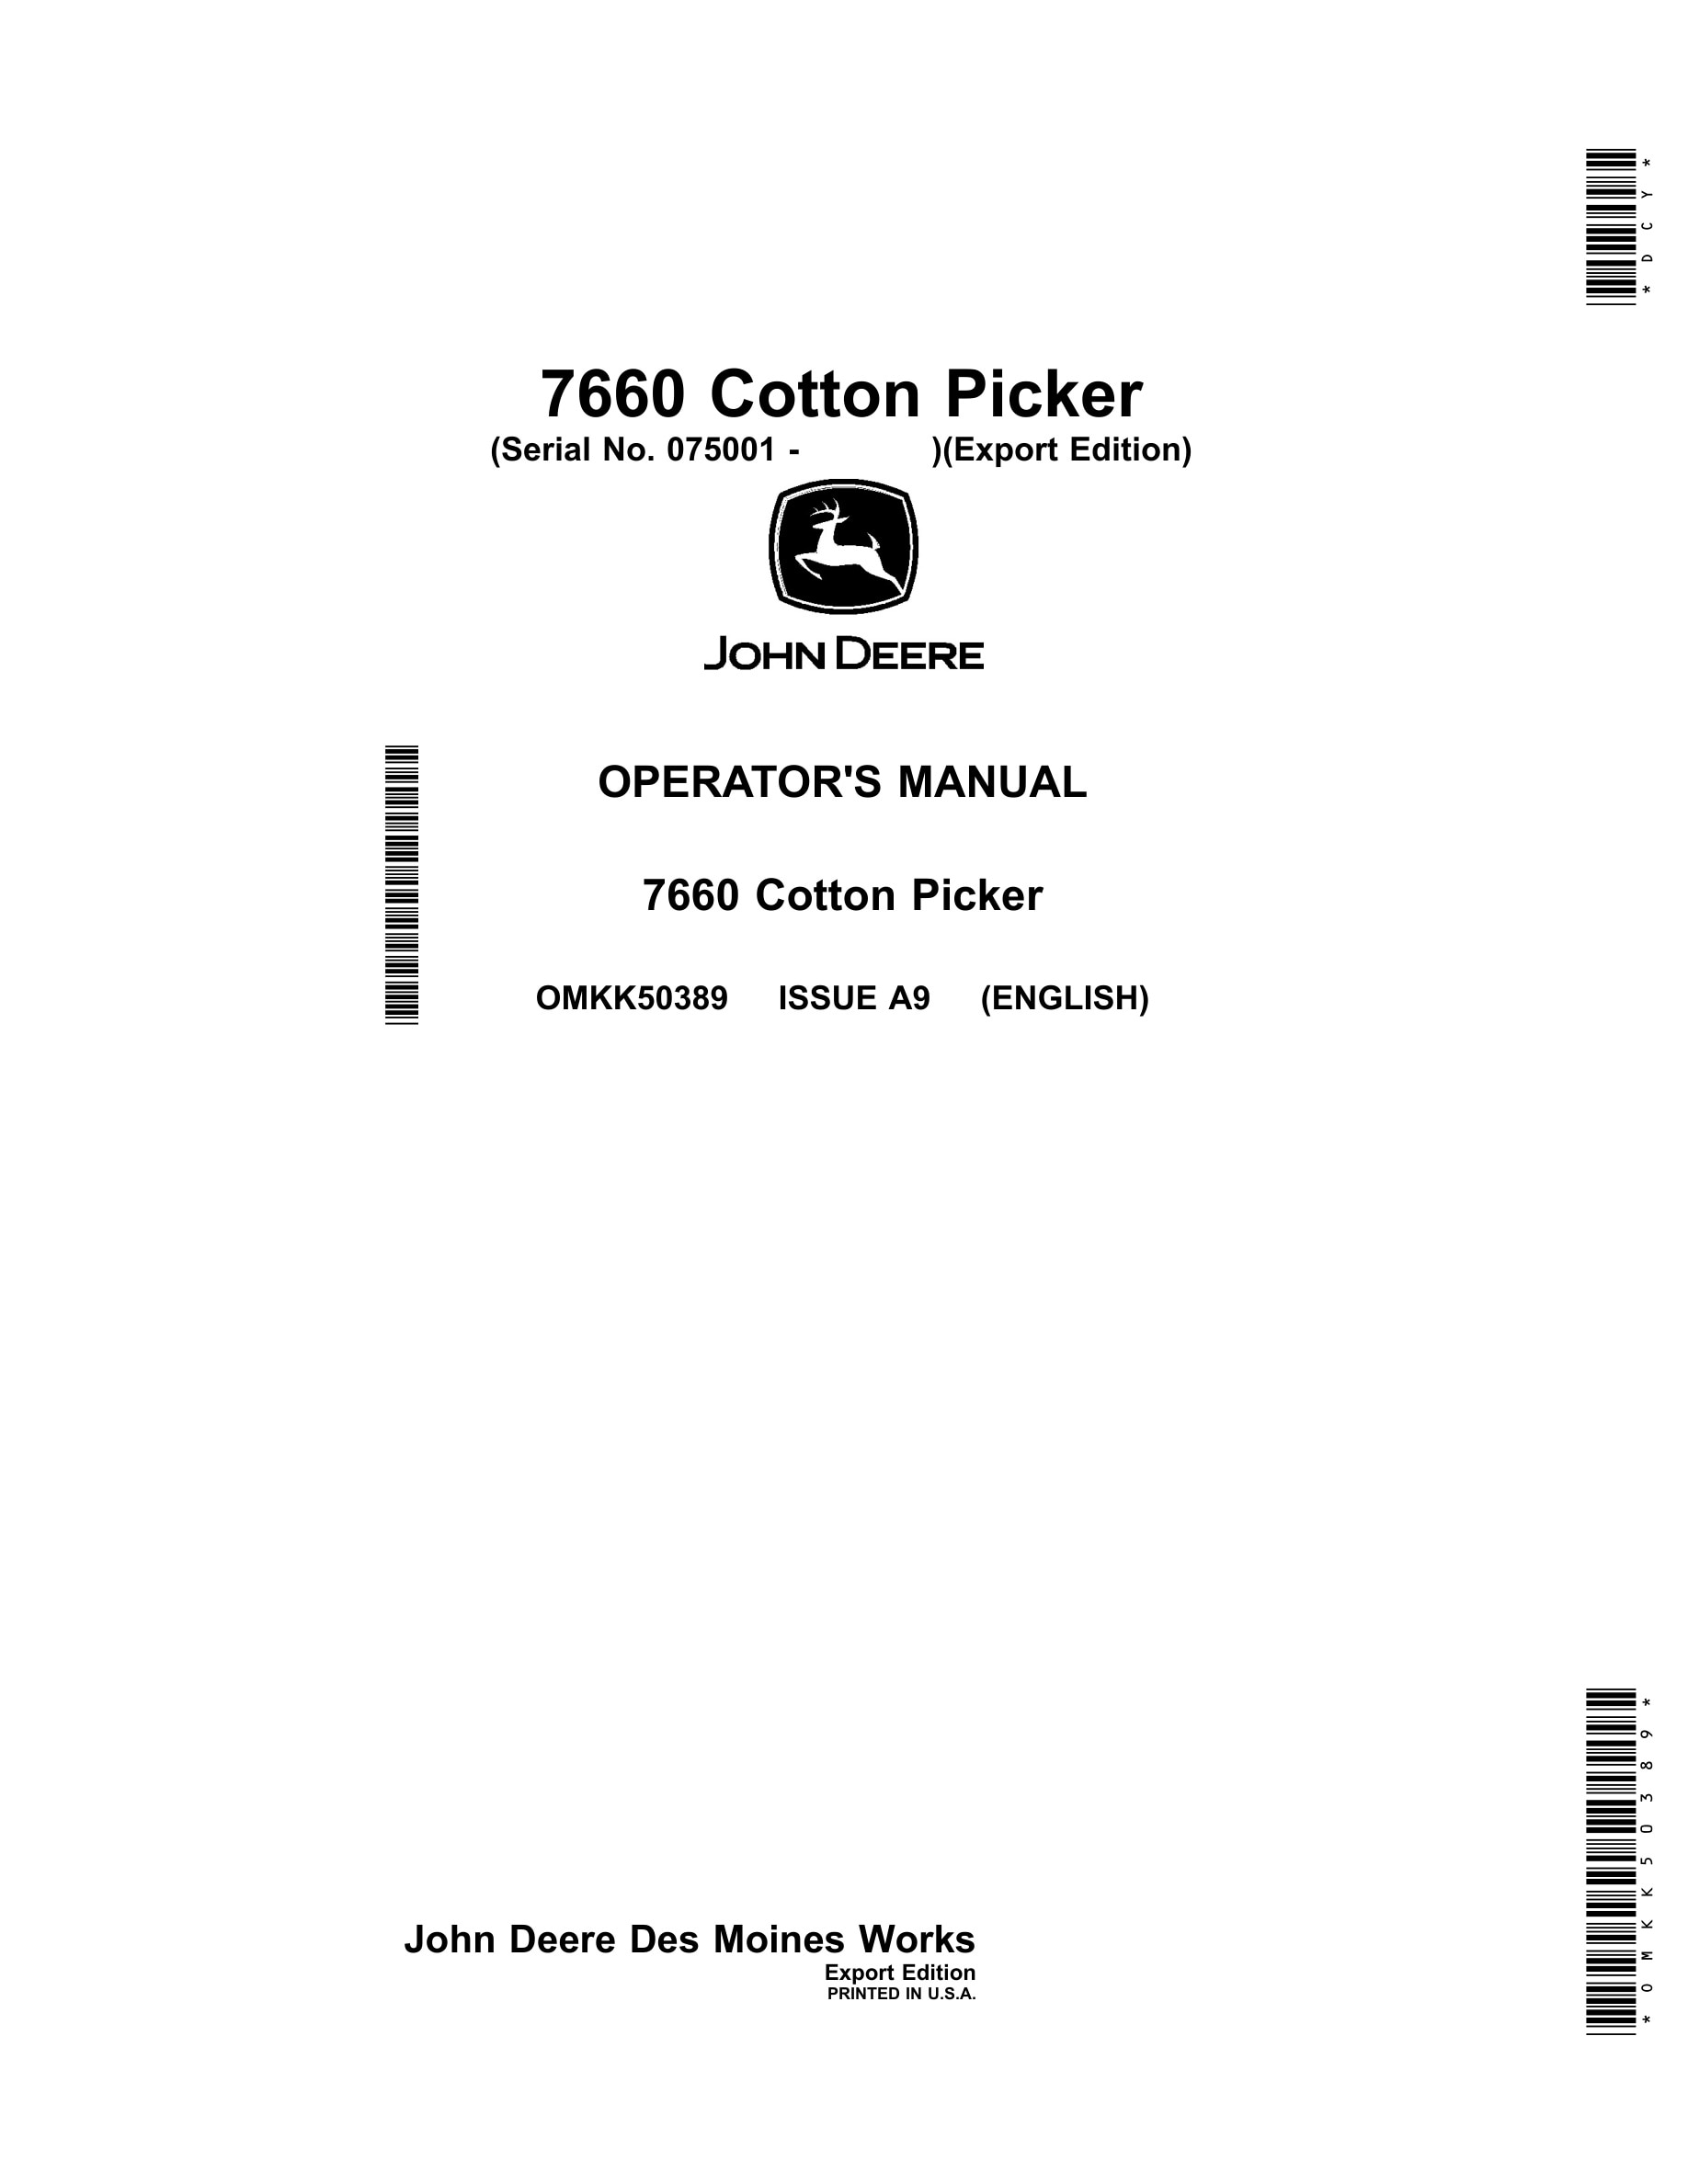 John Deere 7660 Cotton Picker Operator Manual OMKK50389-1